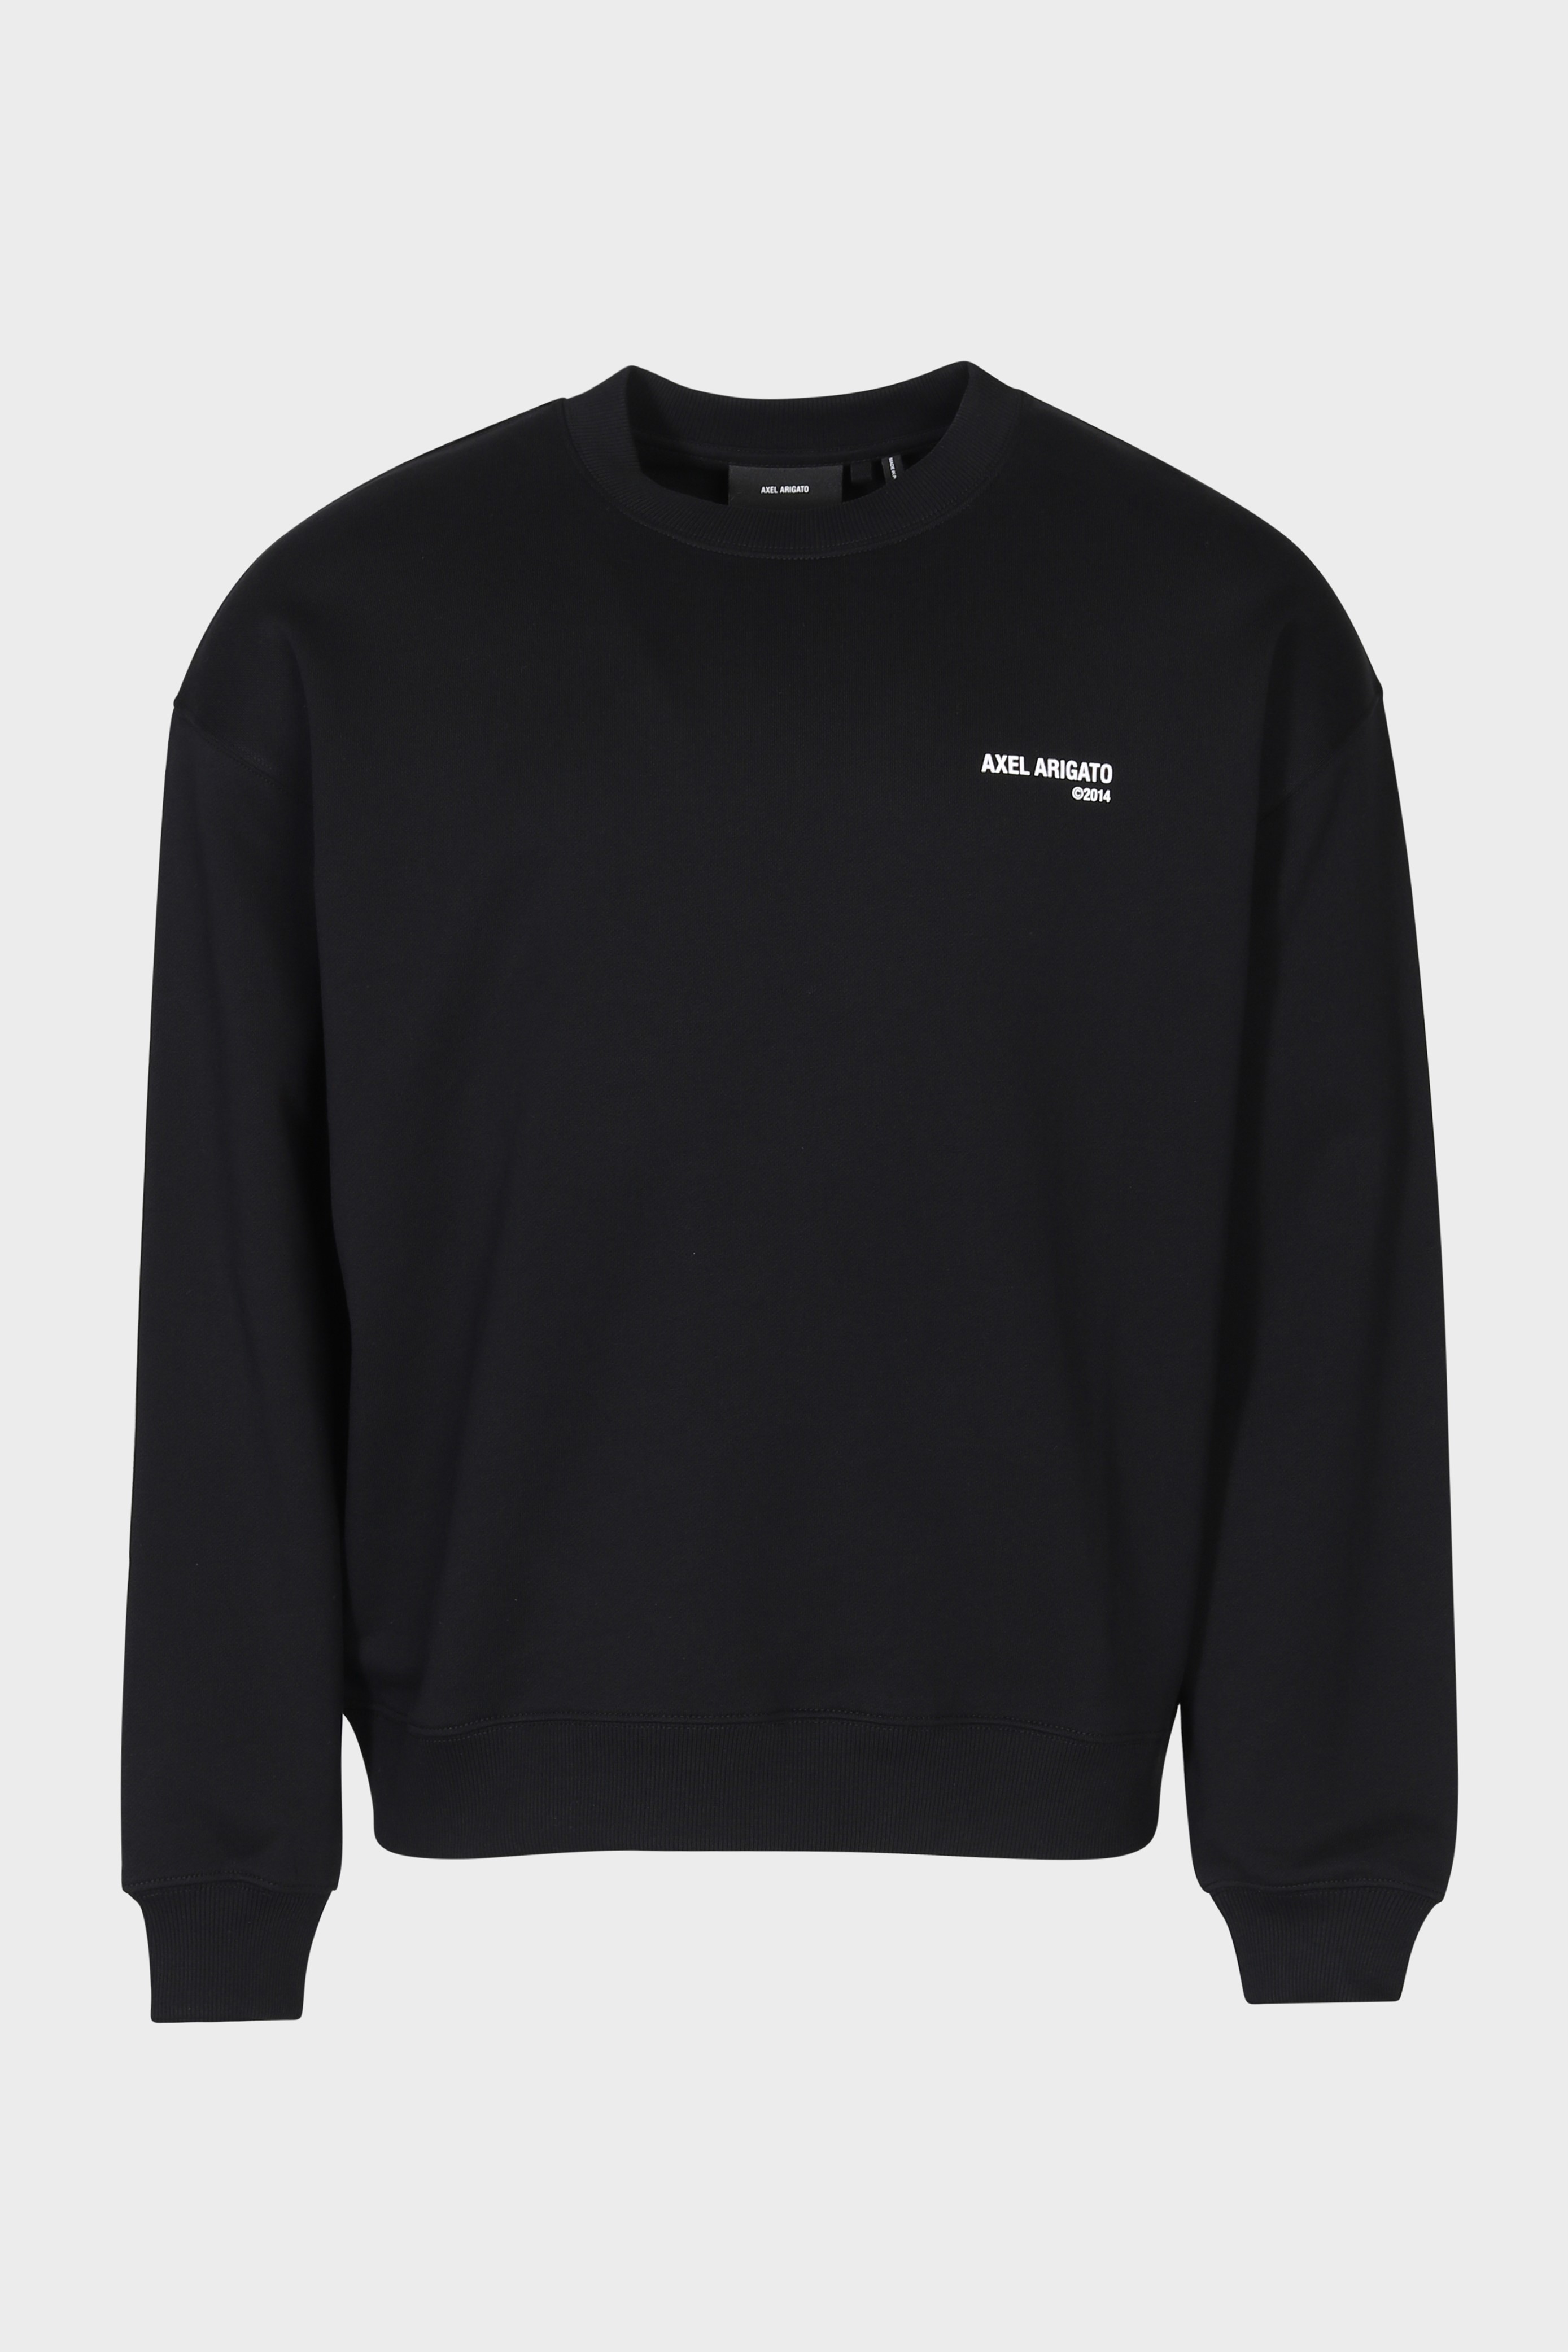 AXEL ARIGATO Spade Sweatshirt in Black L